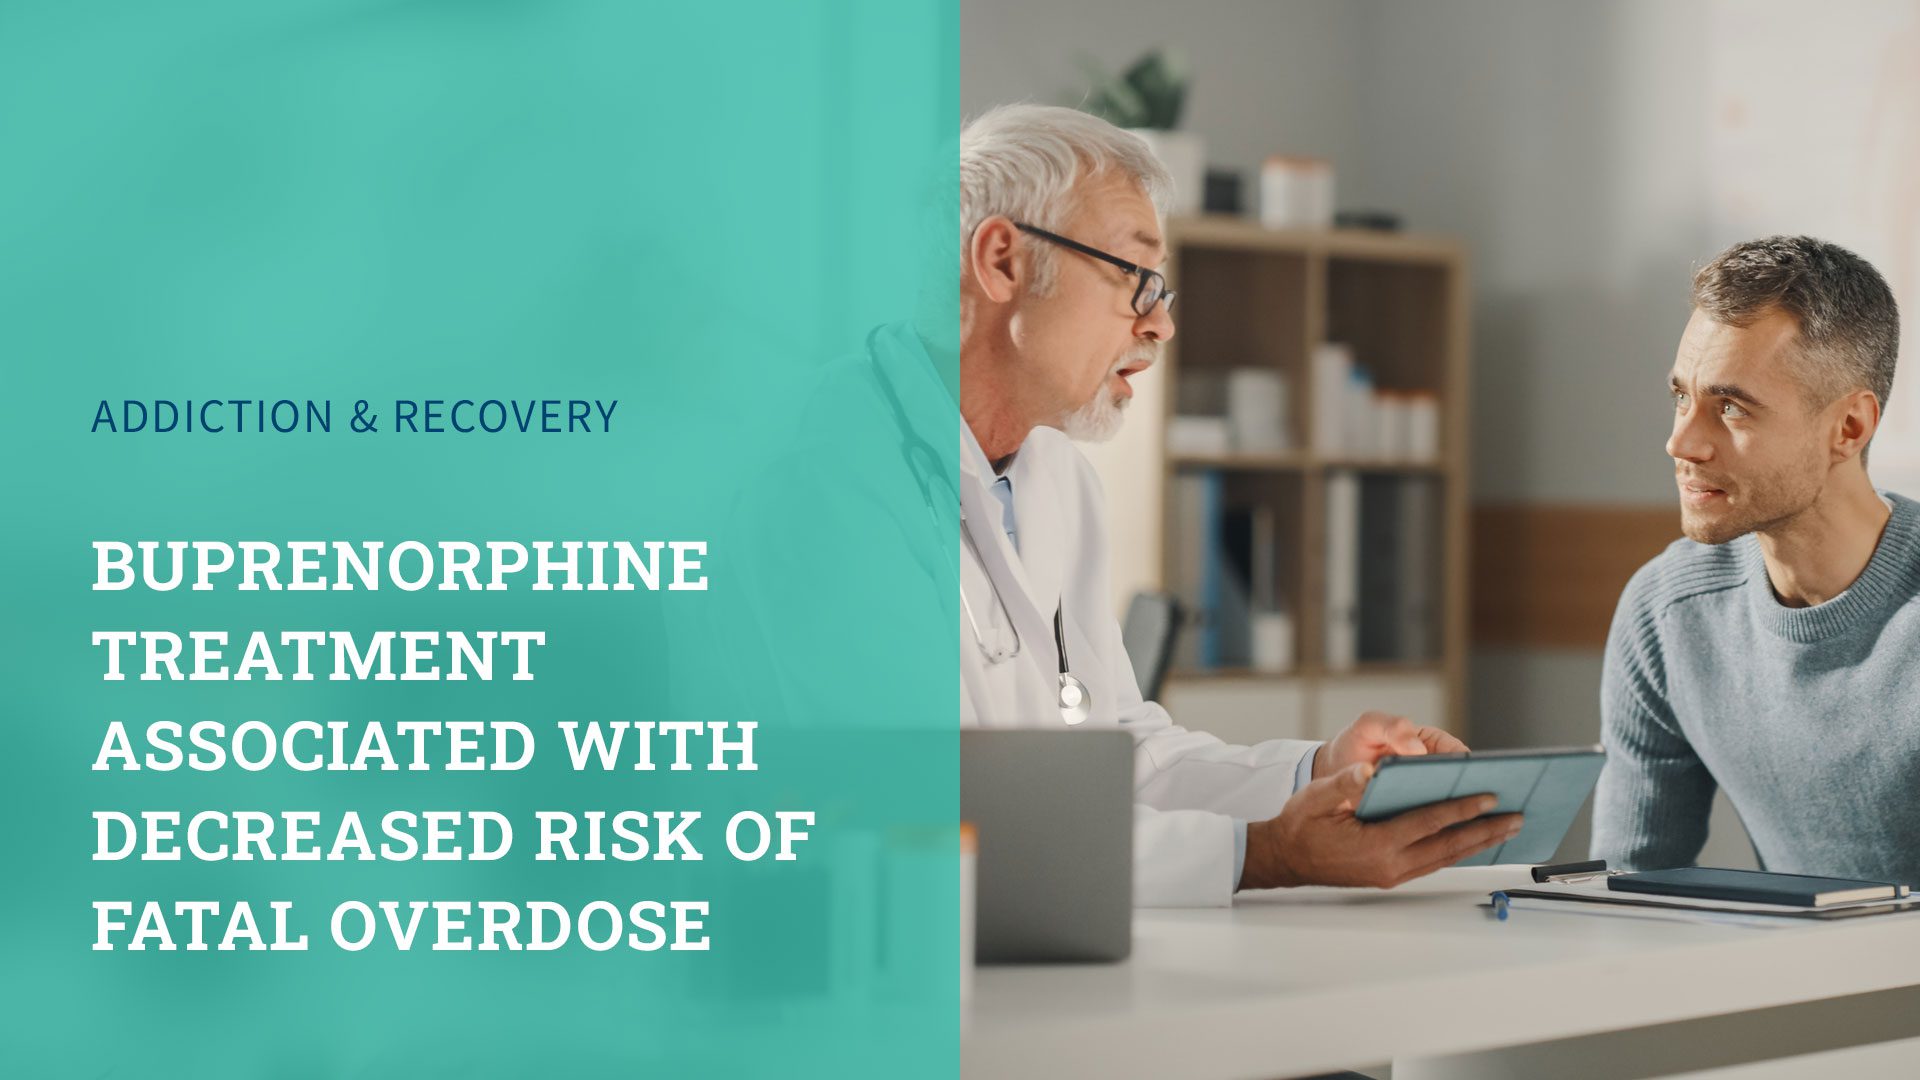 Buprenorphine Treatment Associated With Decreased Risk of Fatal Overdose